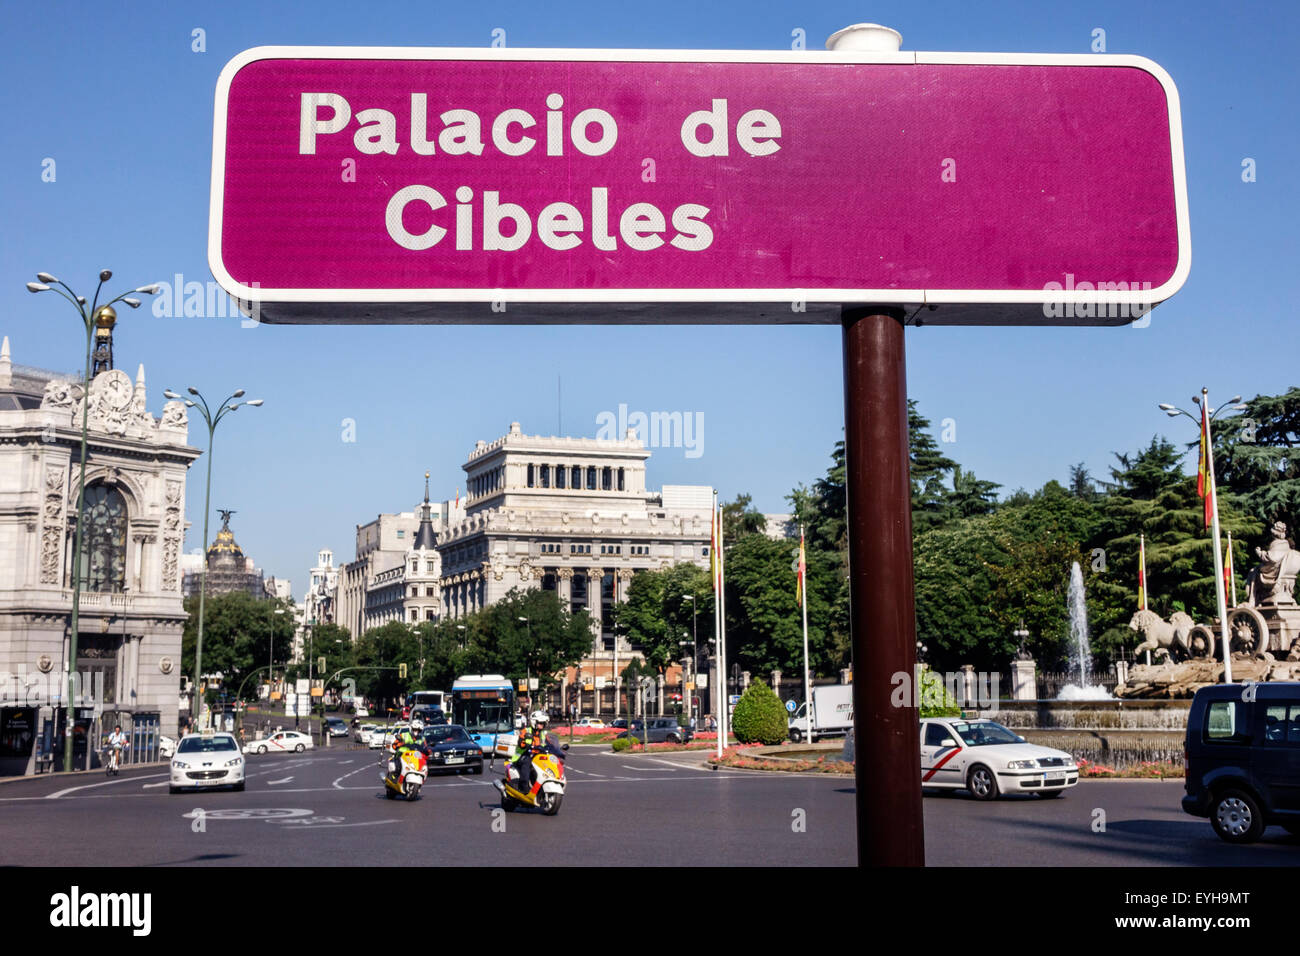 Madrid Espagne,Plaza Cibeles,Palacio de Cibeles,Palacio de Comunicaciones,registre du patrimoine espagnol,propriété culturelle,panneau,emplacement,cercle de circulation,Espagne Banque D'Images